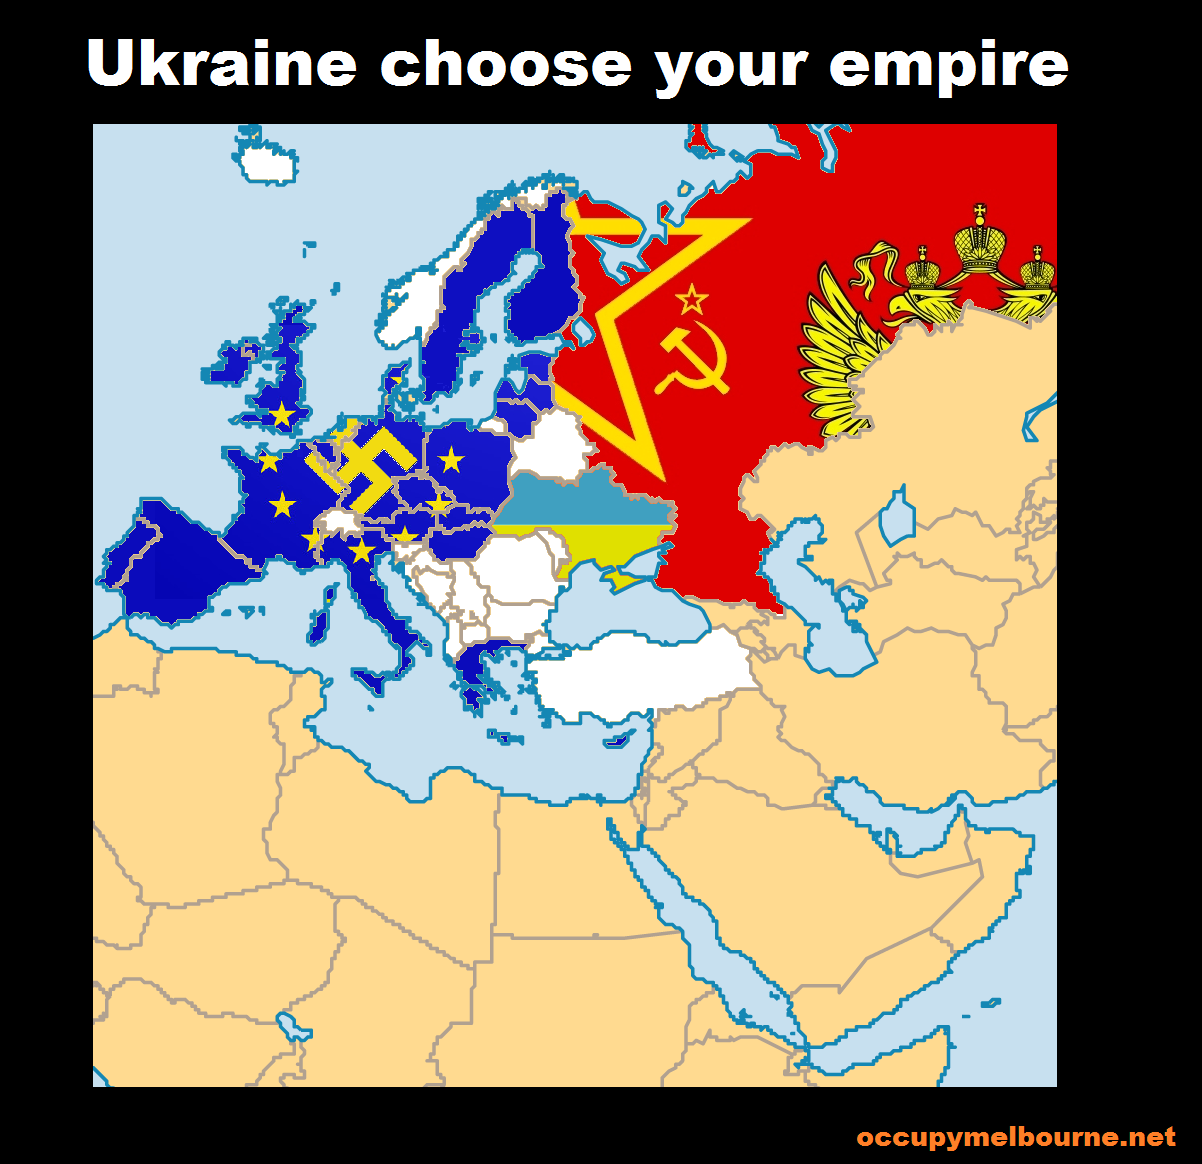 Ukraine's options